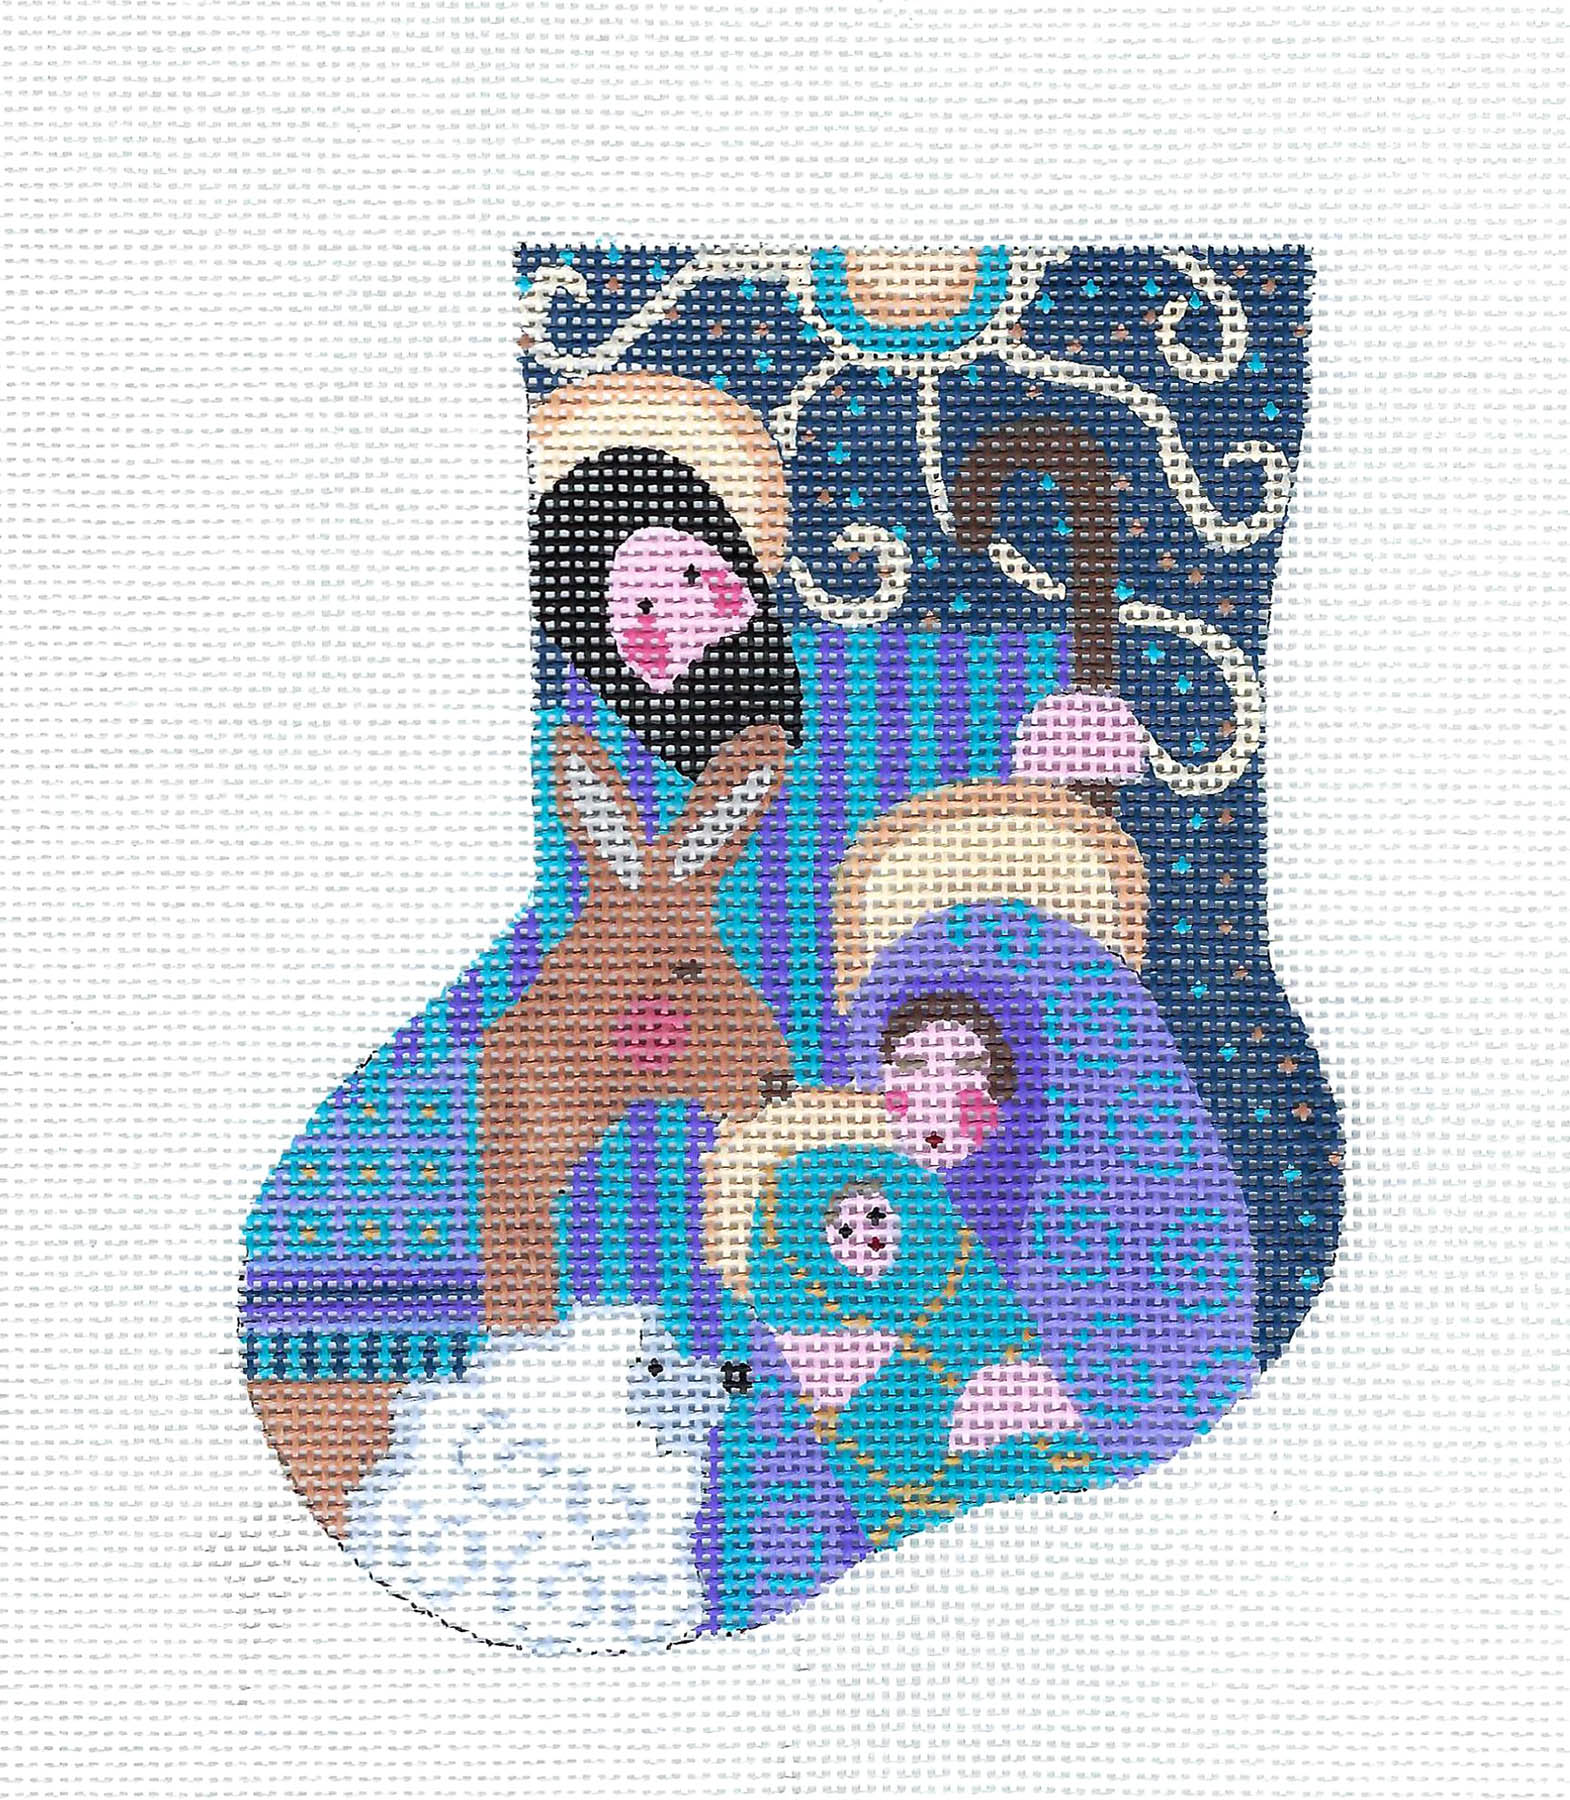 Stocking - Nativity hand-painted needlepoint stitching canvas